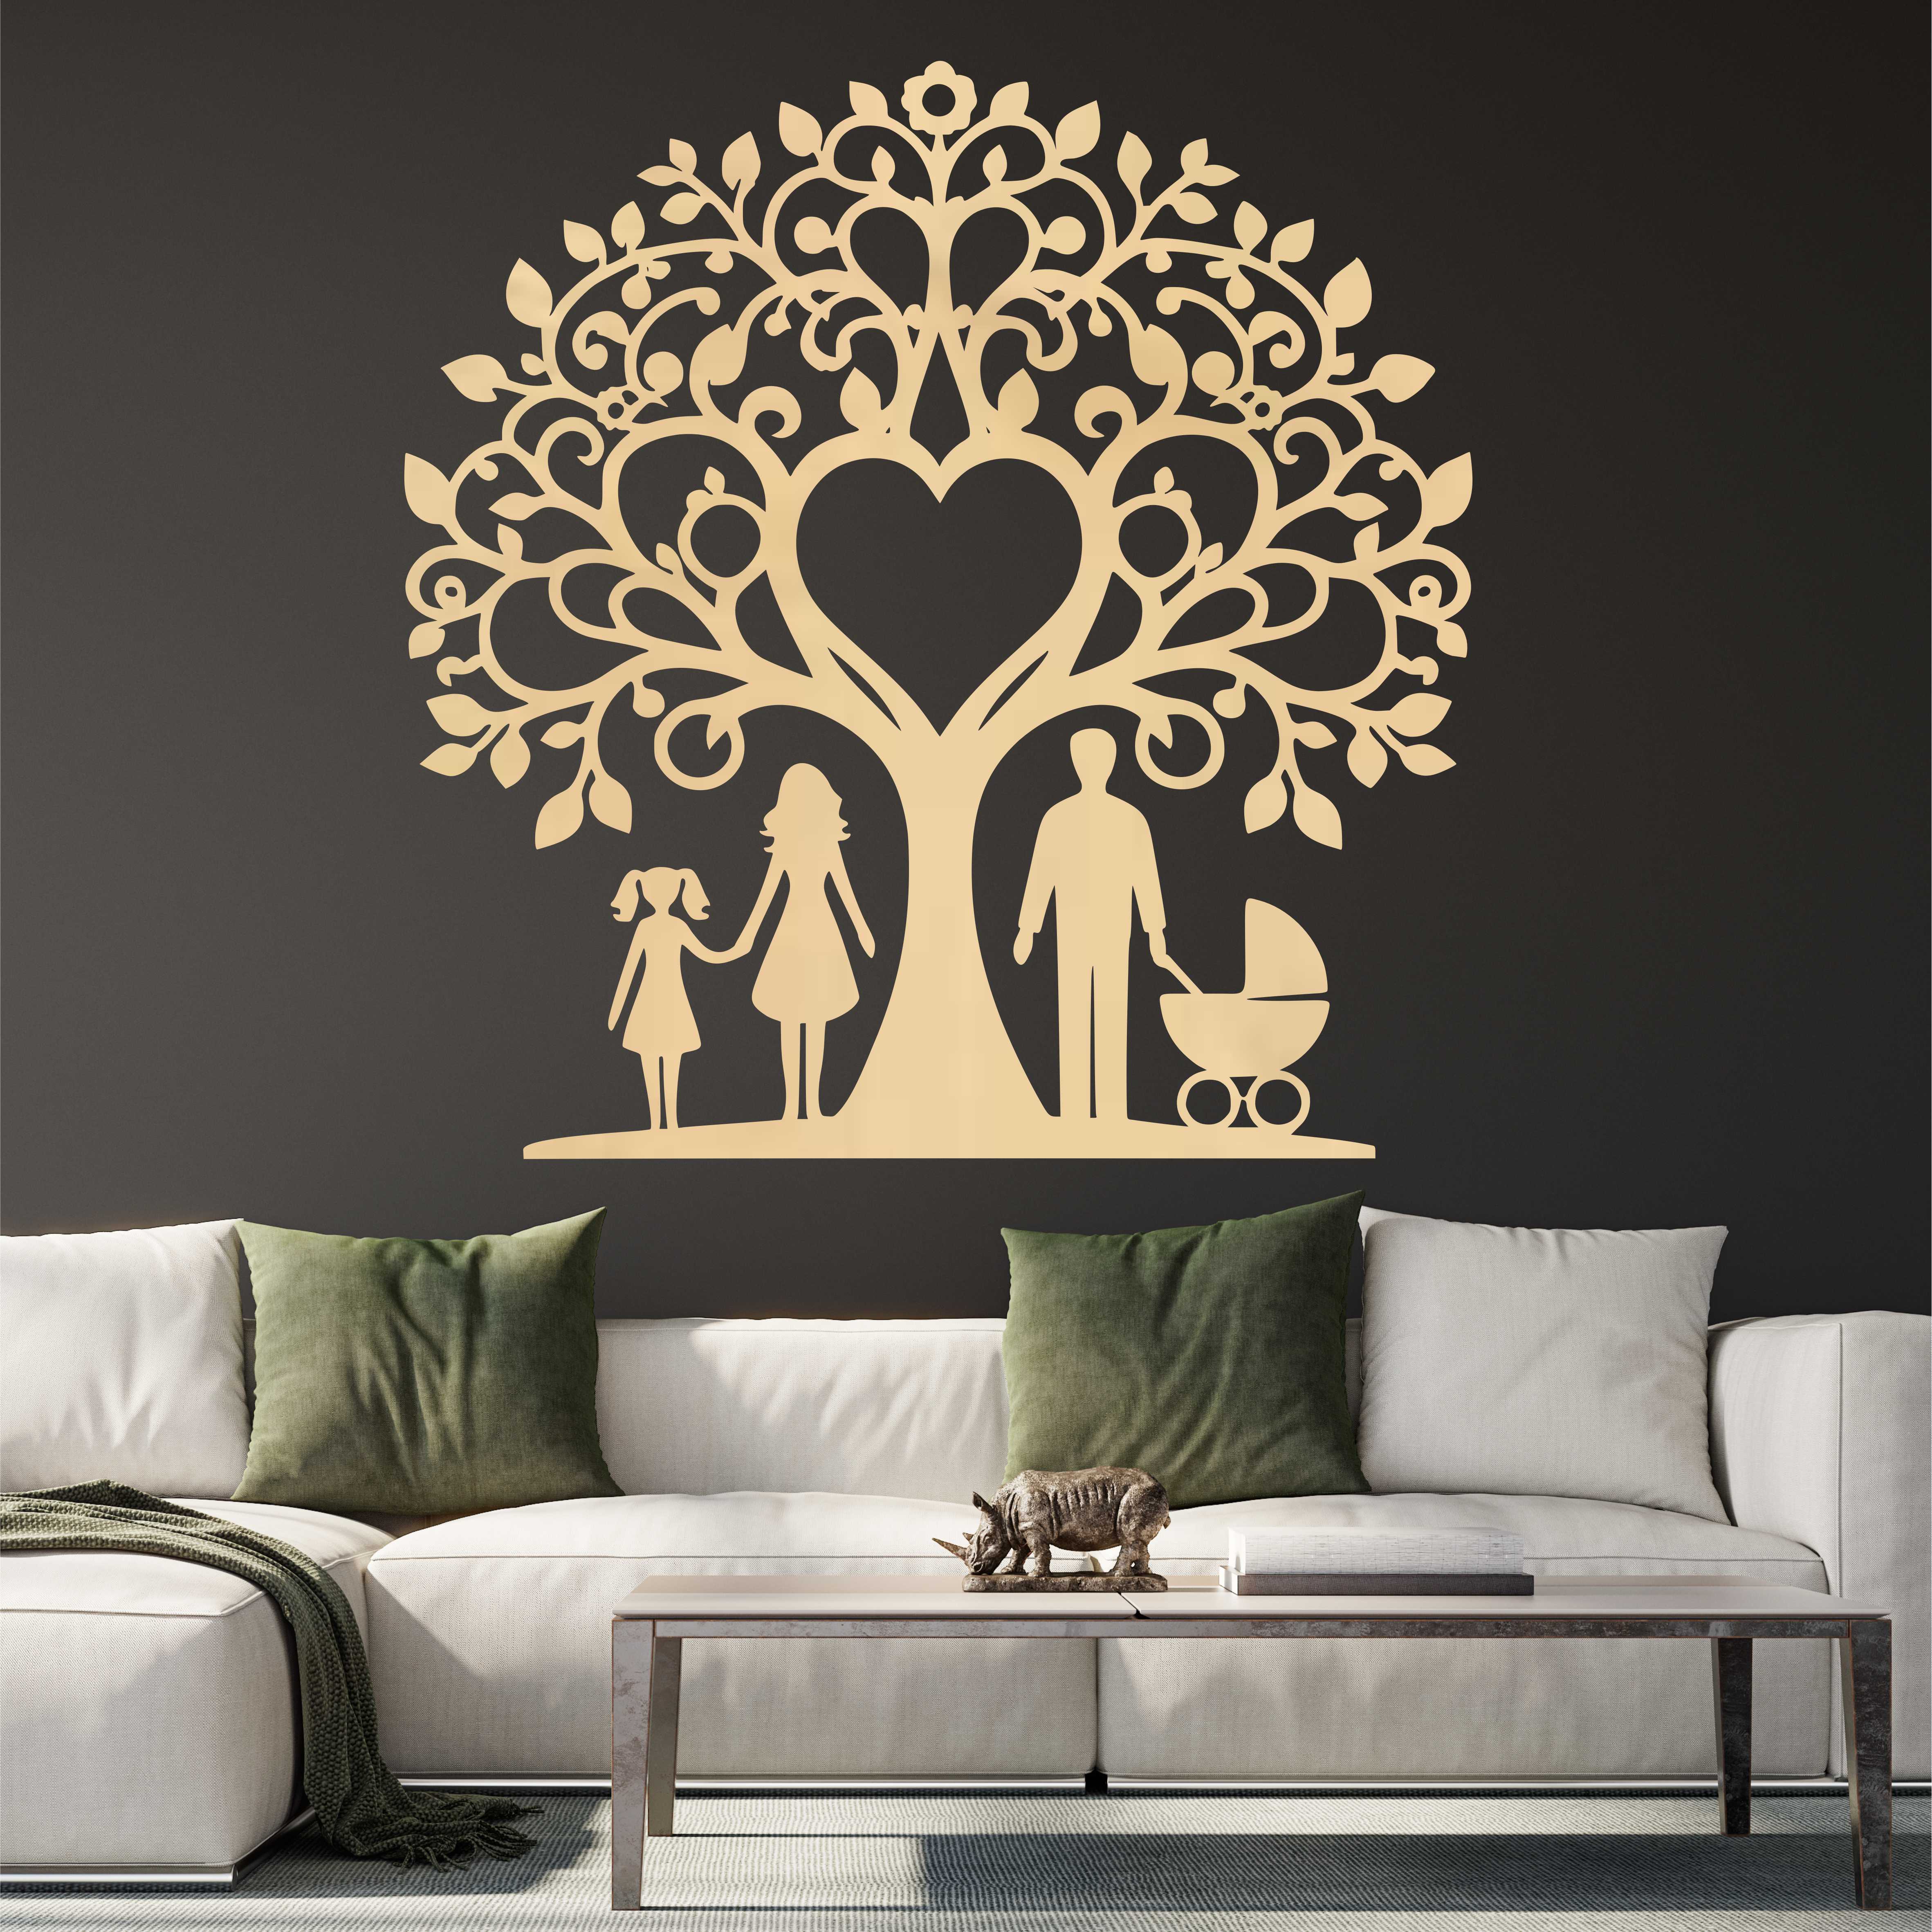 Rodinný strom ze dřeva na zeď - táta, máma, dcera a kočárek